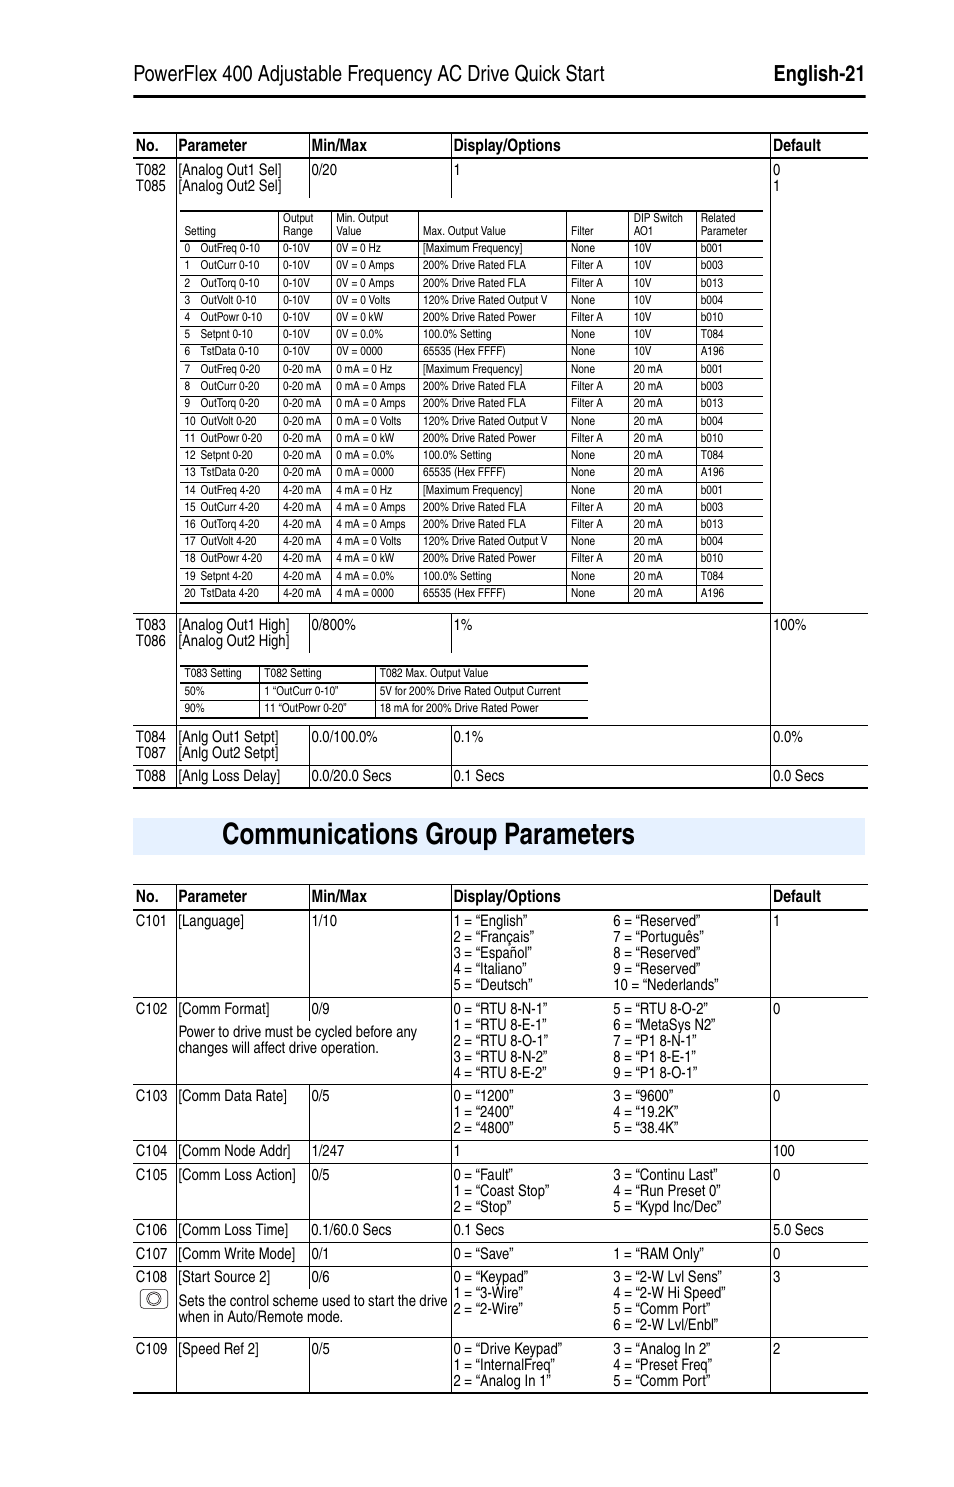 Communications group parameters, No. parameter min/max display/options